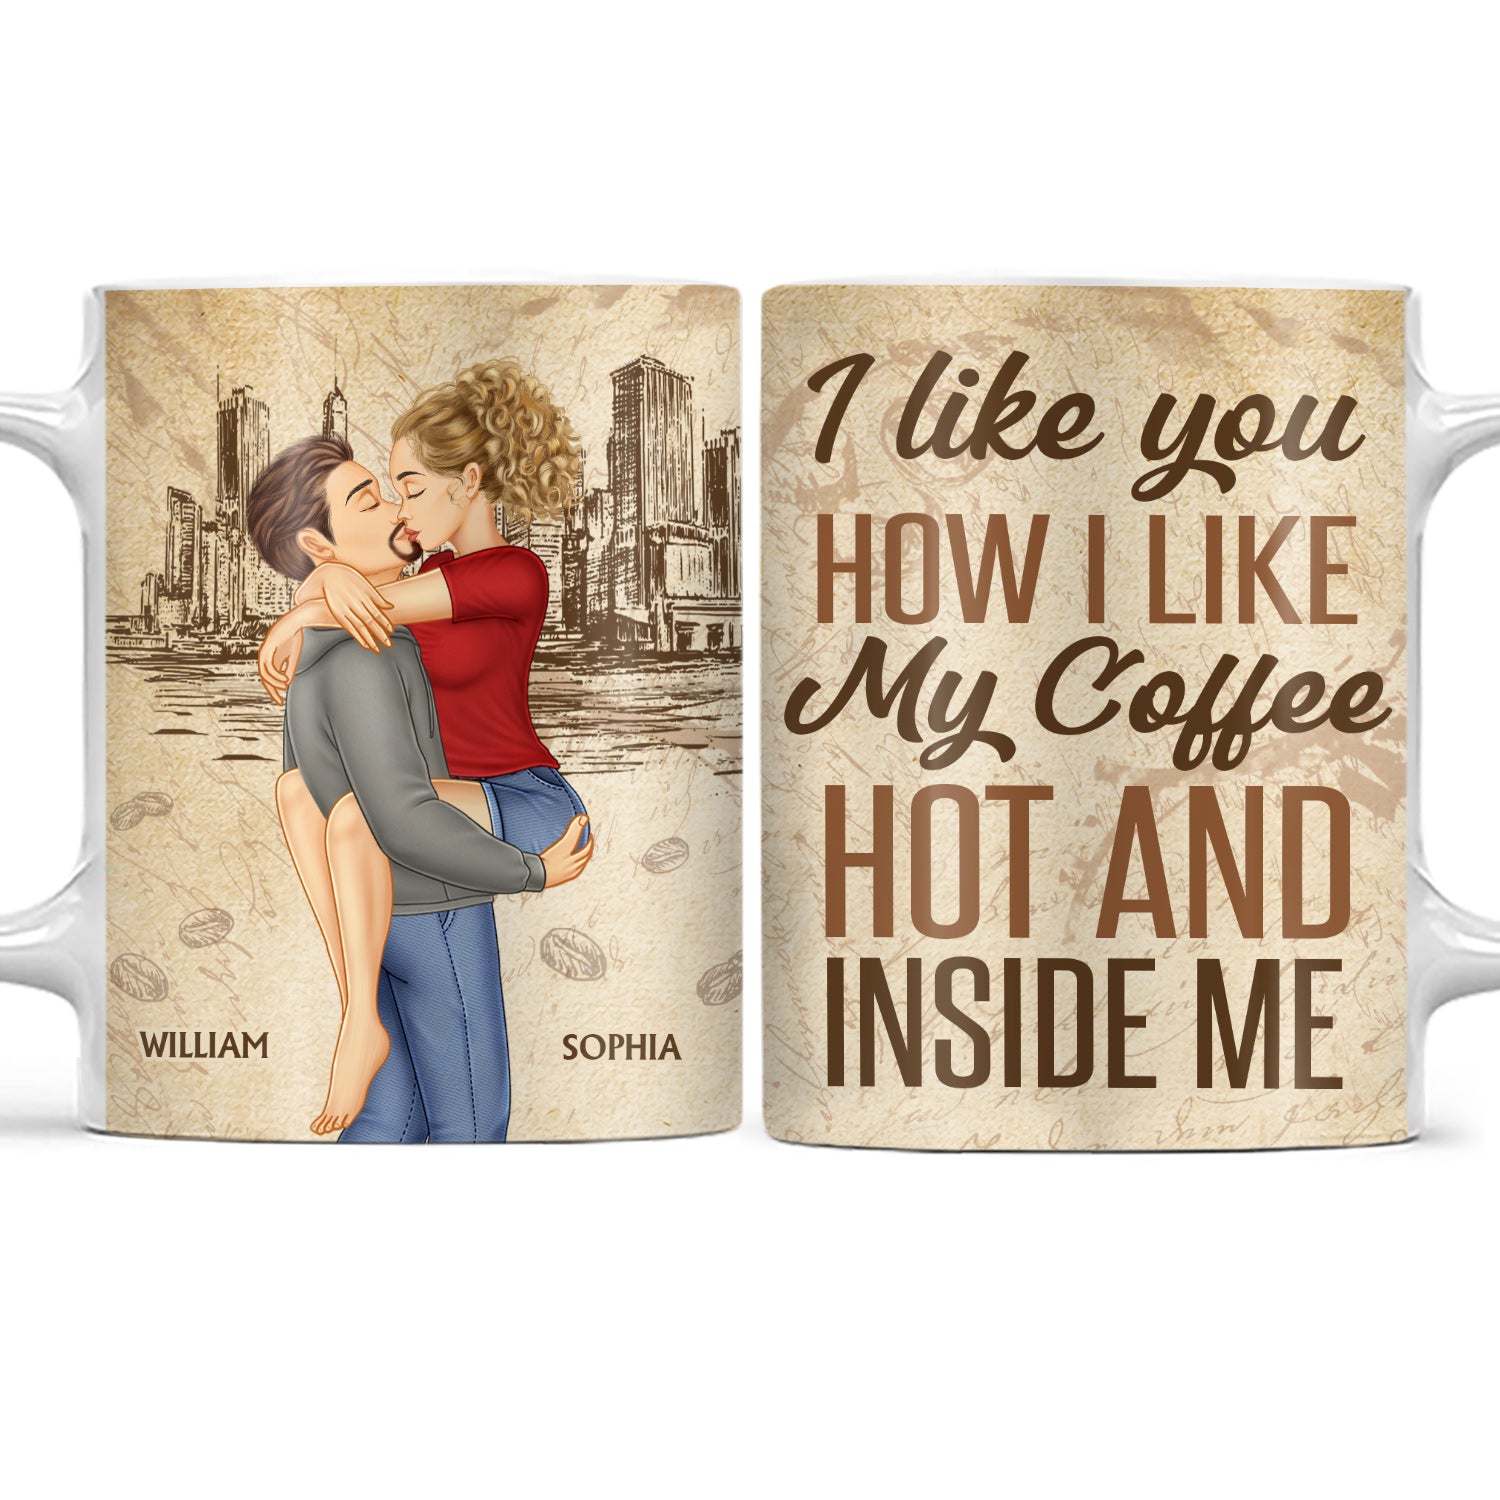 I Like You How I Like My Coffee - Birthday, Loving, Anniversary Gift For Spouse, Husband, Wife, Couple, Boyfriend, Girlfriend - Personalized White Edge-to-Edge Mug